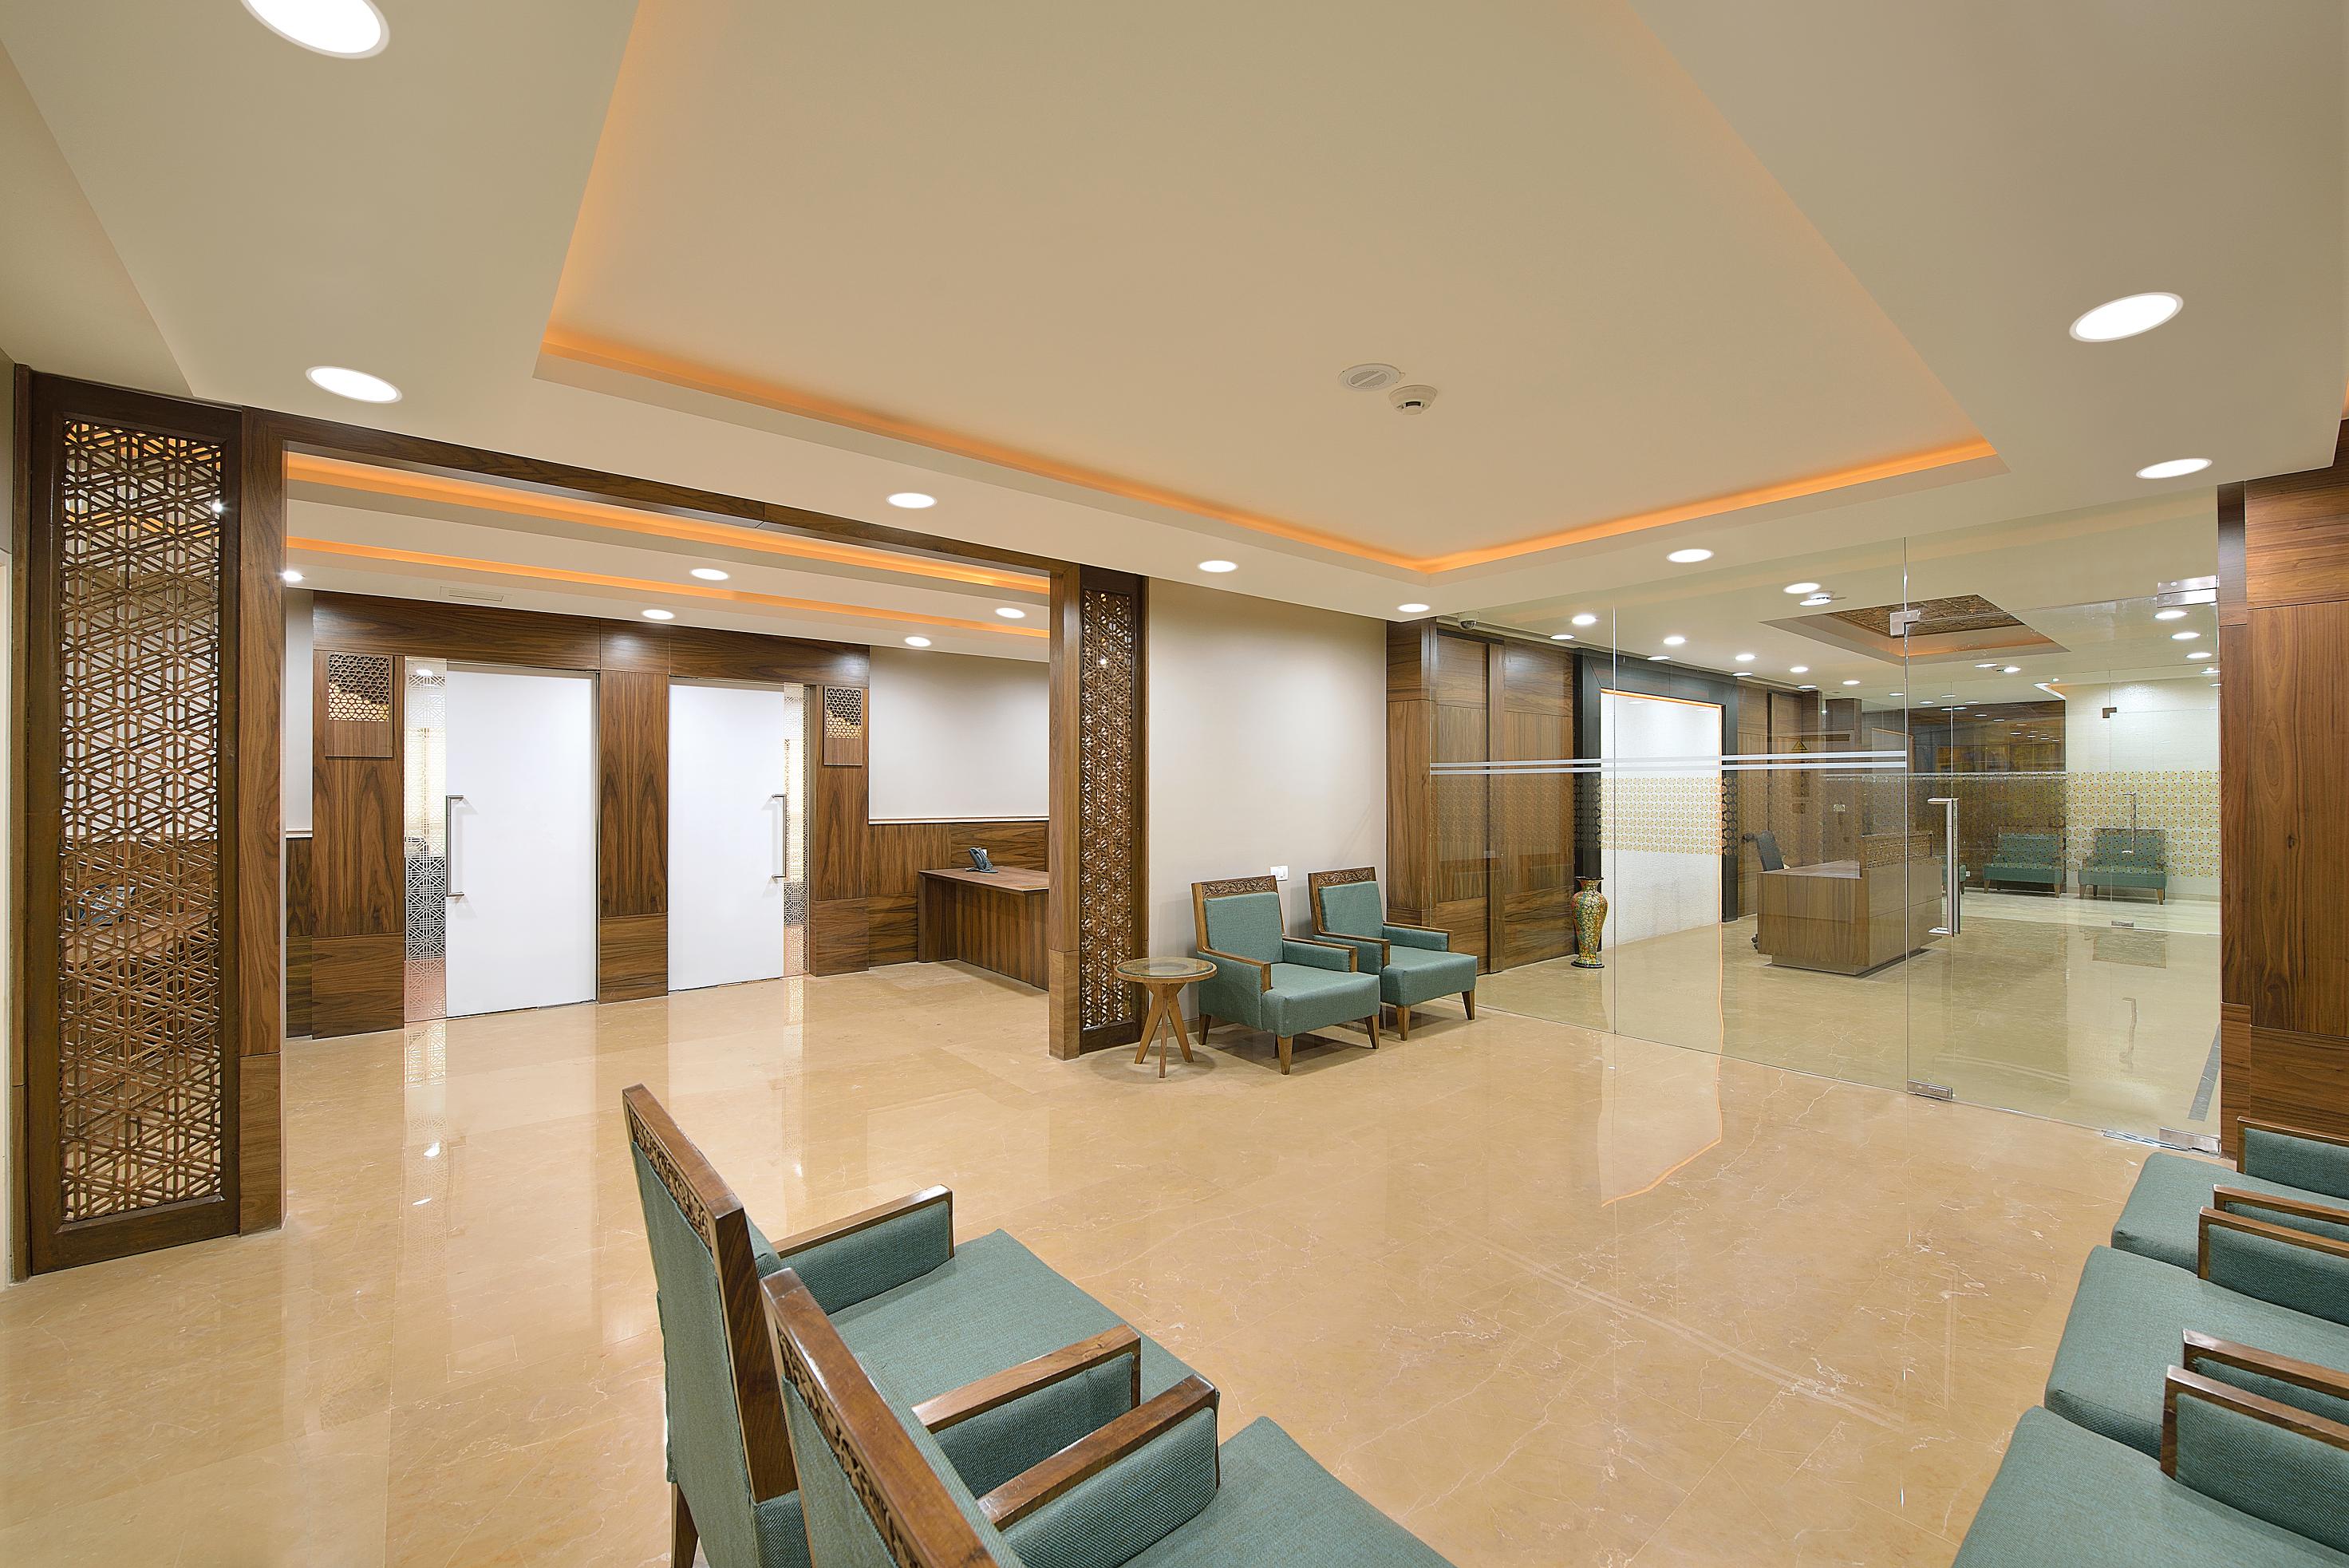 Interiors for J&K Bank, Srinagar | Ratan J. Batliboi Consultants Pvt. Ltd.